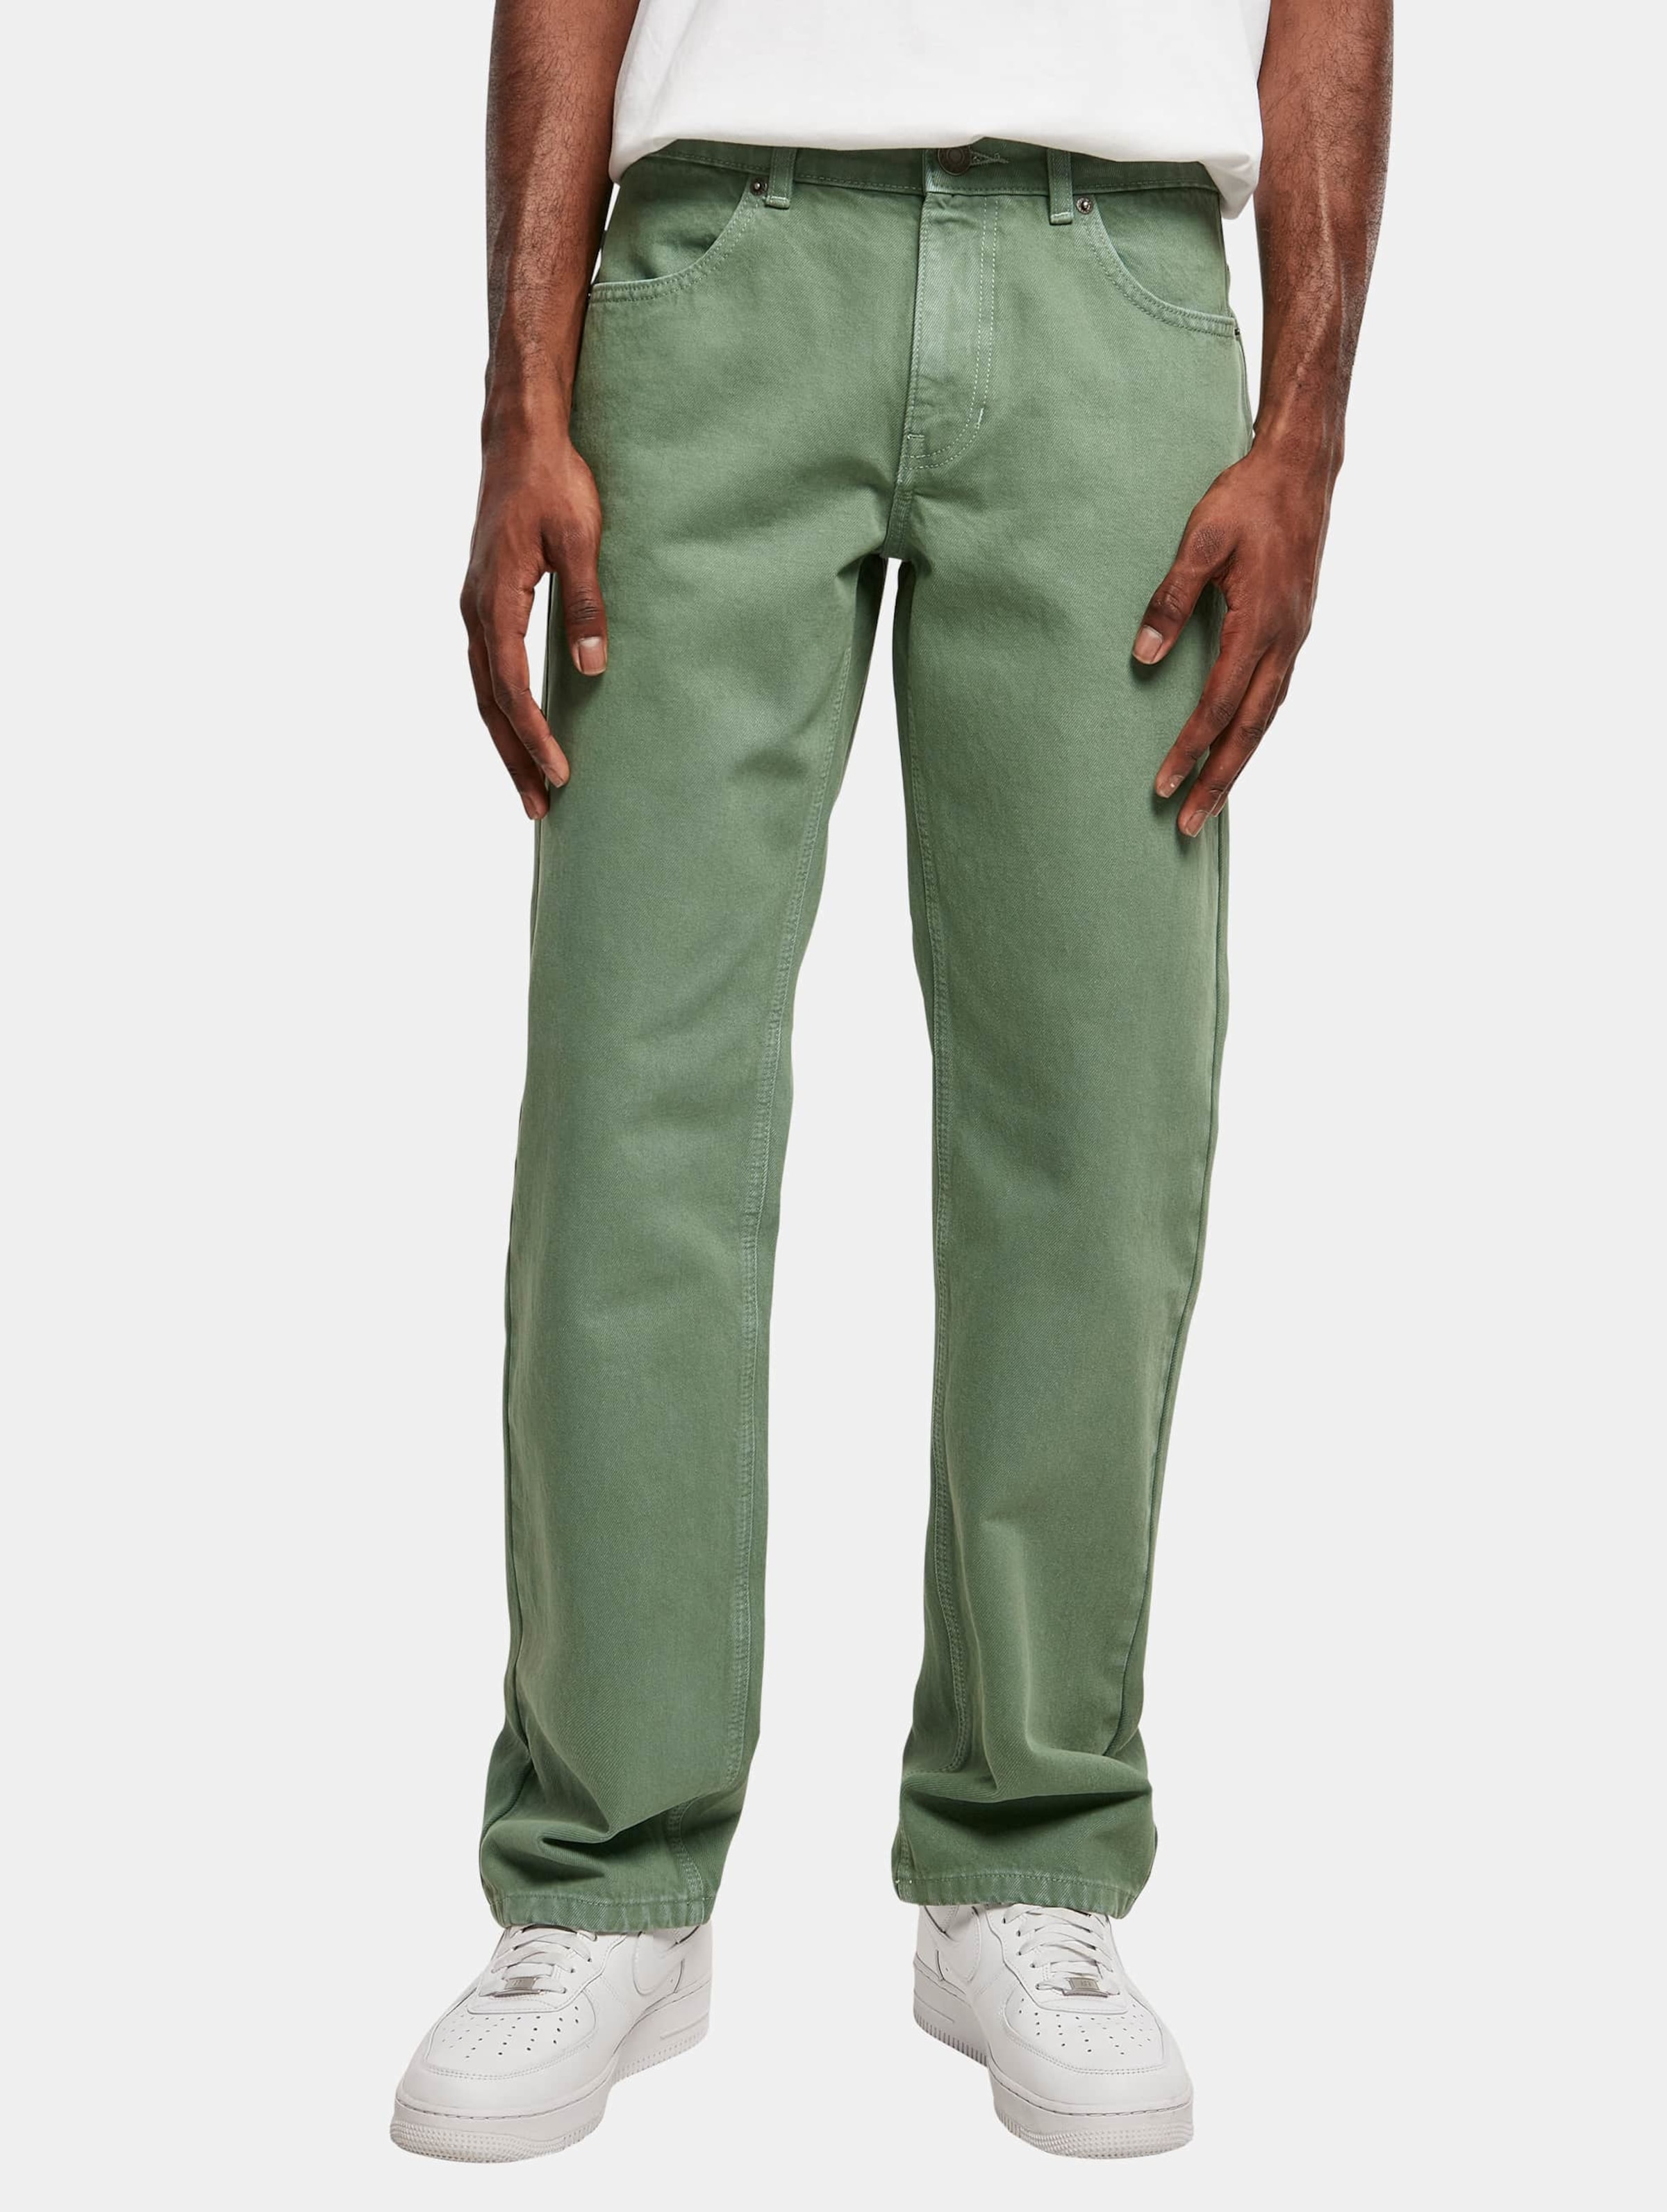 Urban Classics Broek rechte pijpen -Taille, 40 inch- Colored Loose Fit Jeans Groen